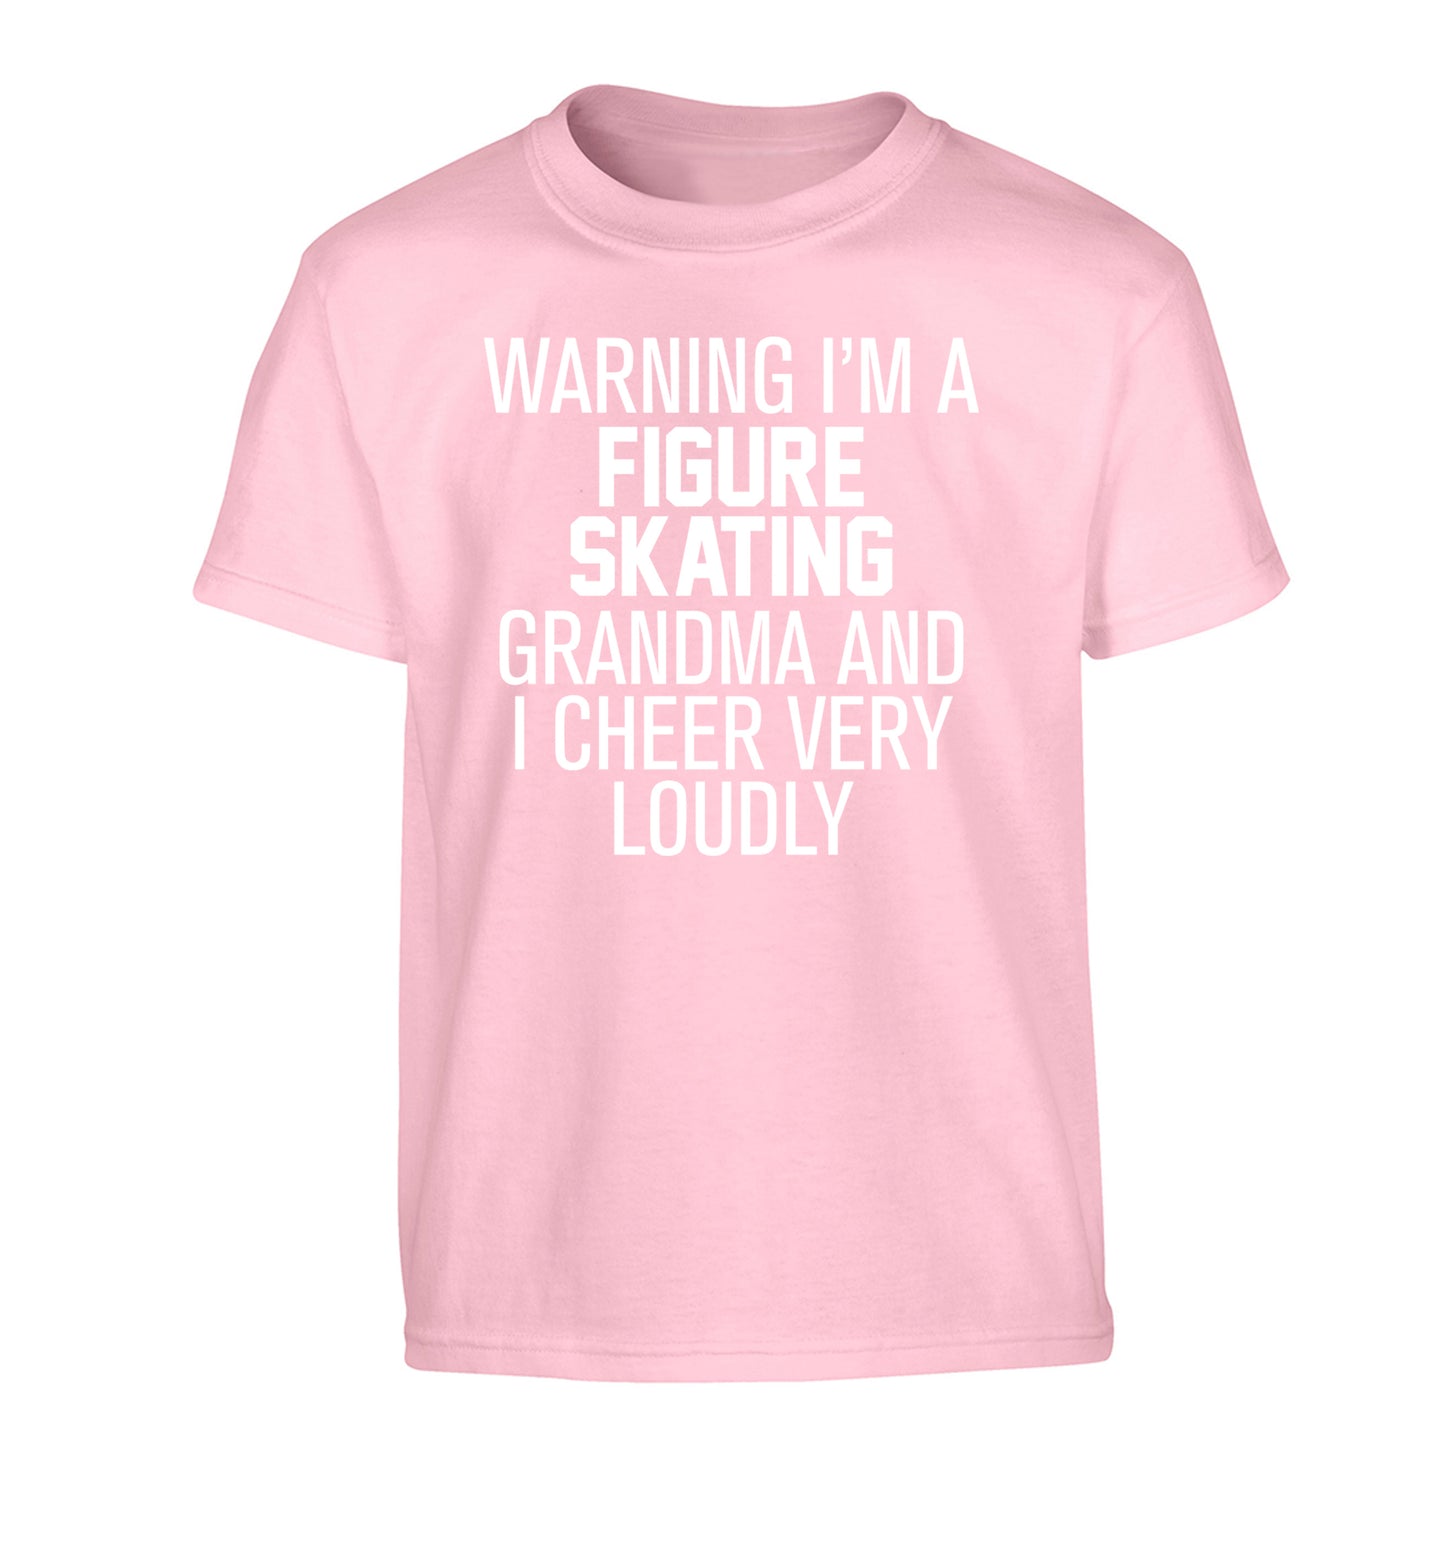 Warning I'm a figure skating grandma and I cheer very loudly Children's light pink Tshirt 12-14 Years